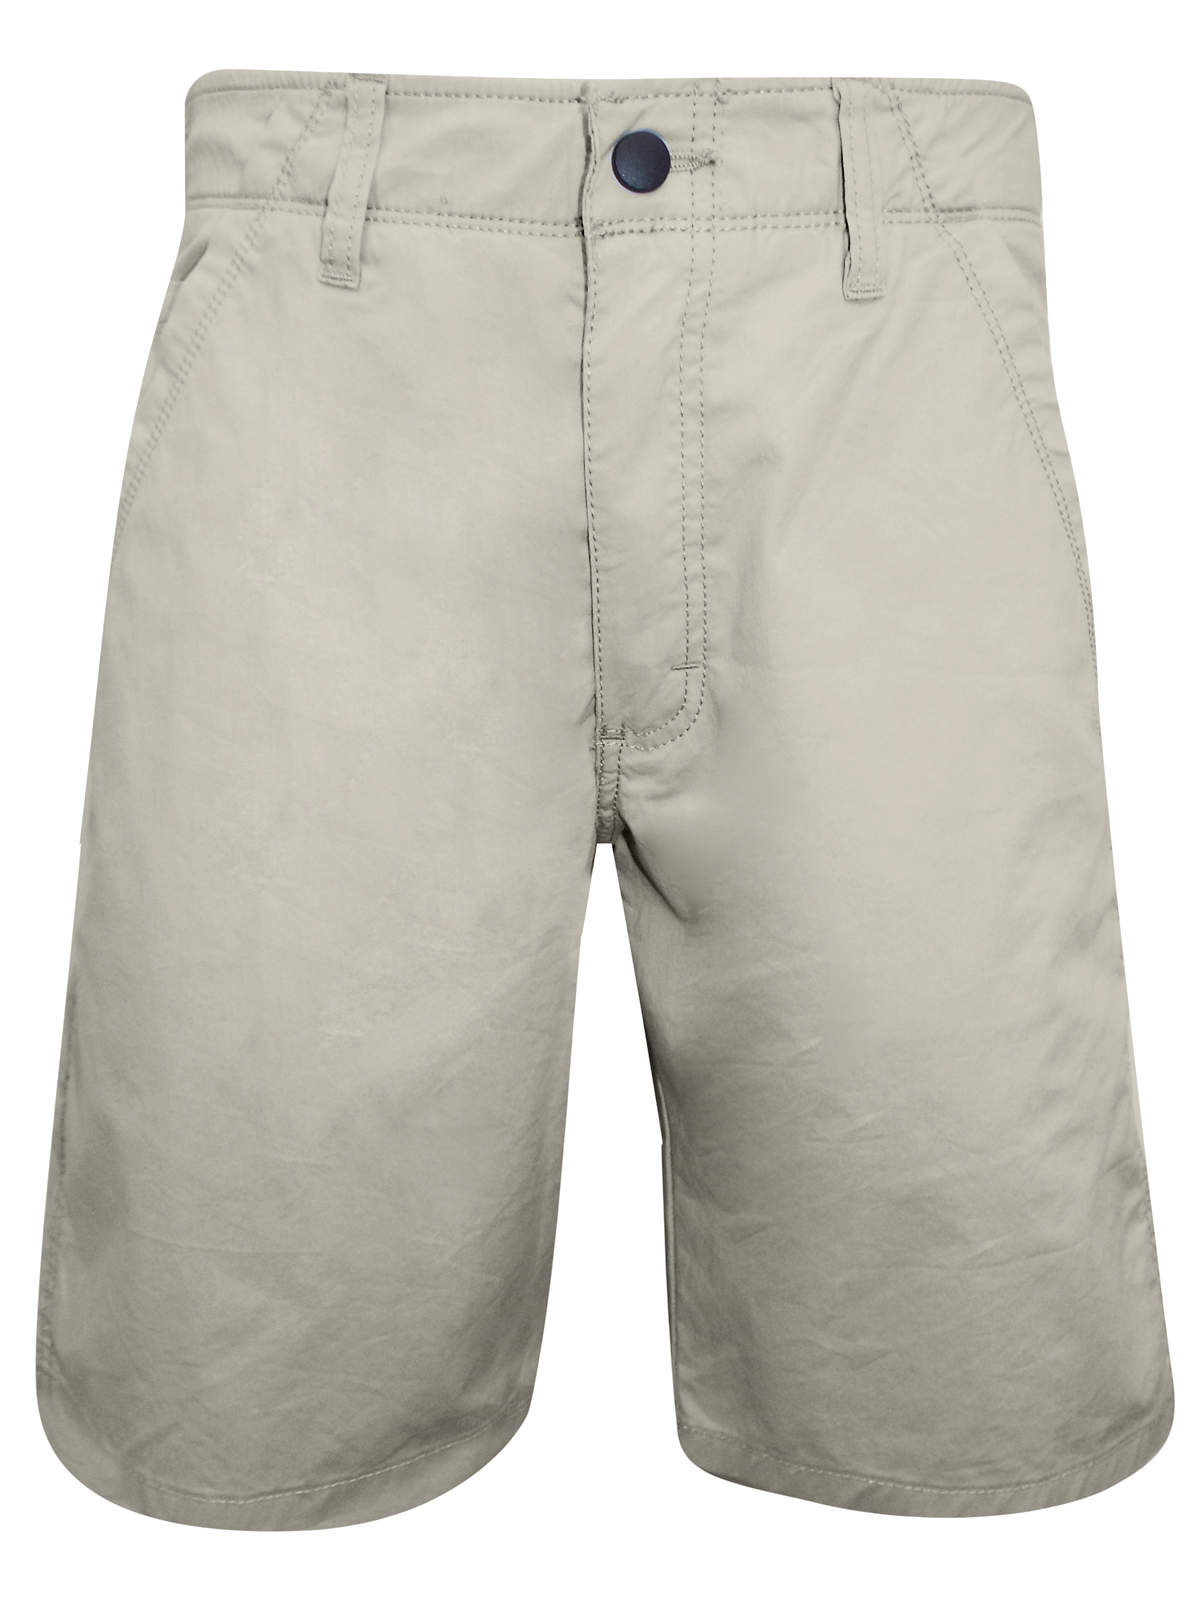 Wrangler - - Wr4ngler STONE Pure Cotton Twill Shorts - Waist Size 32 to 42